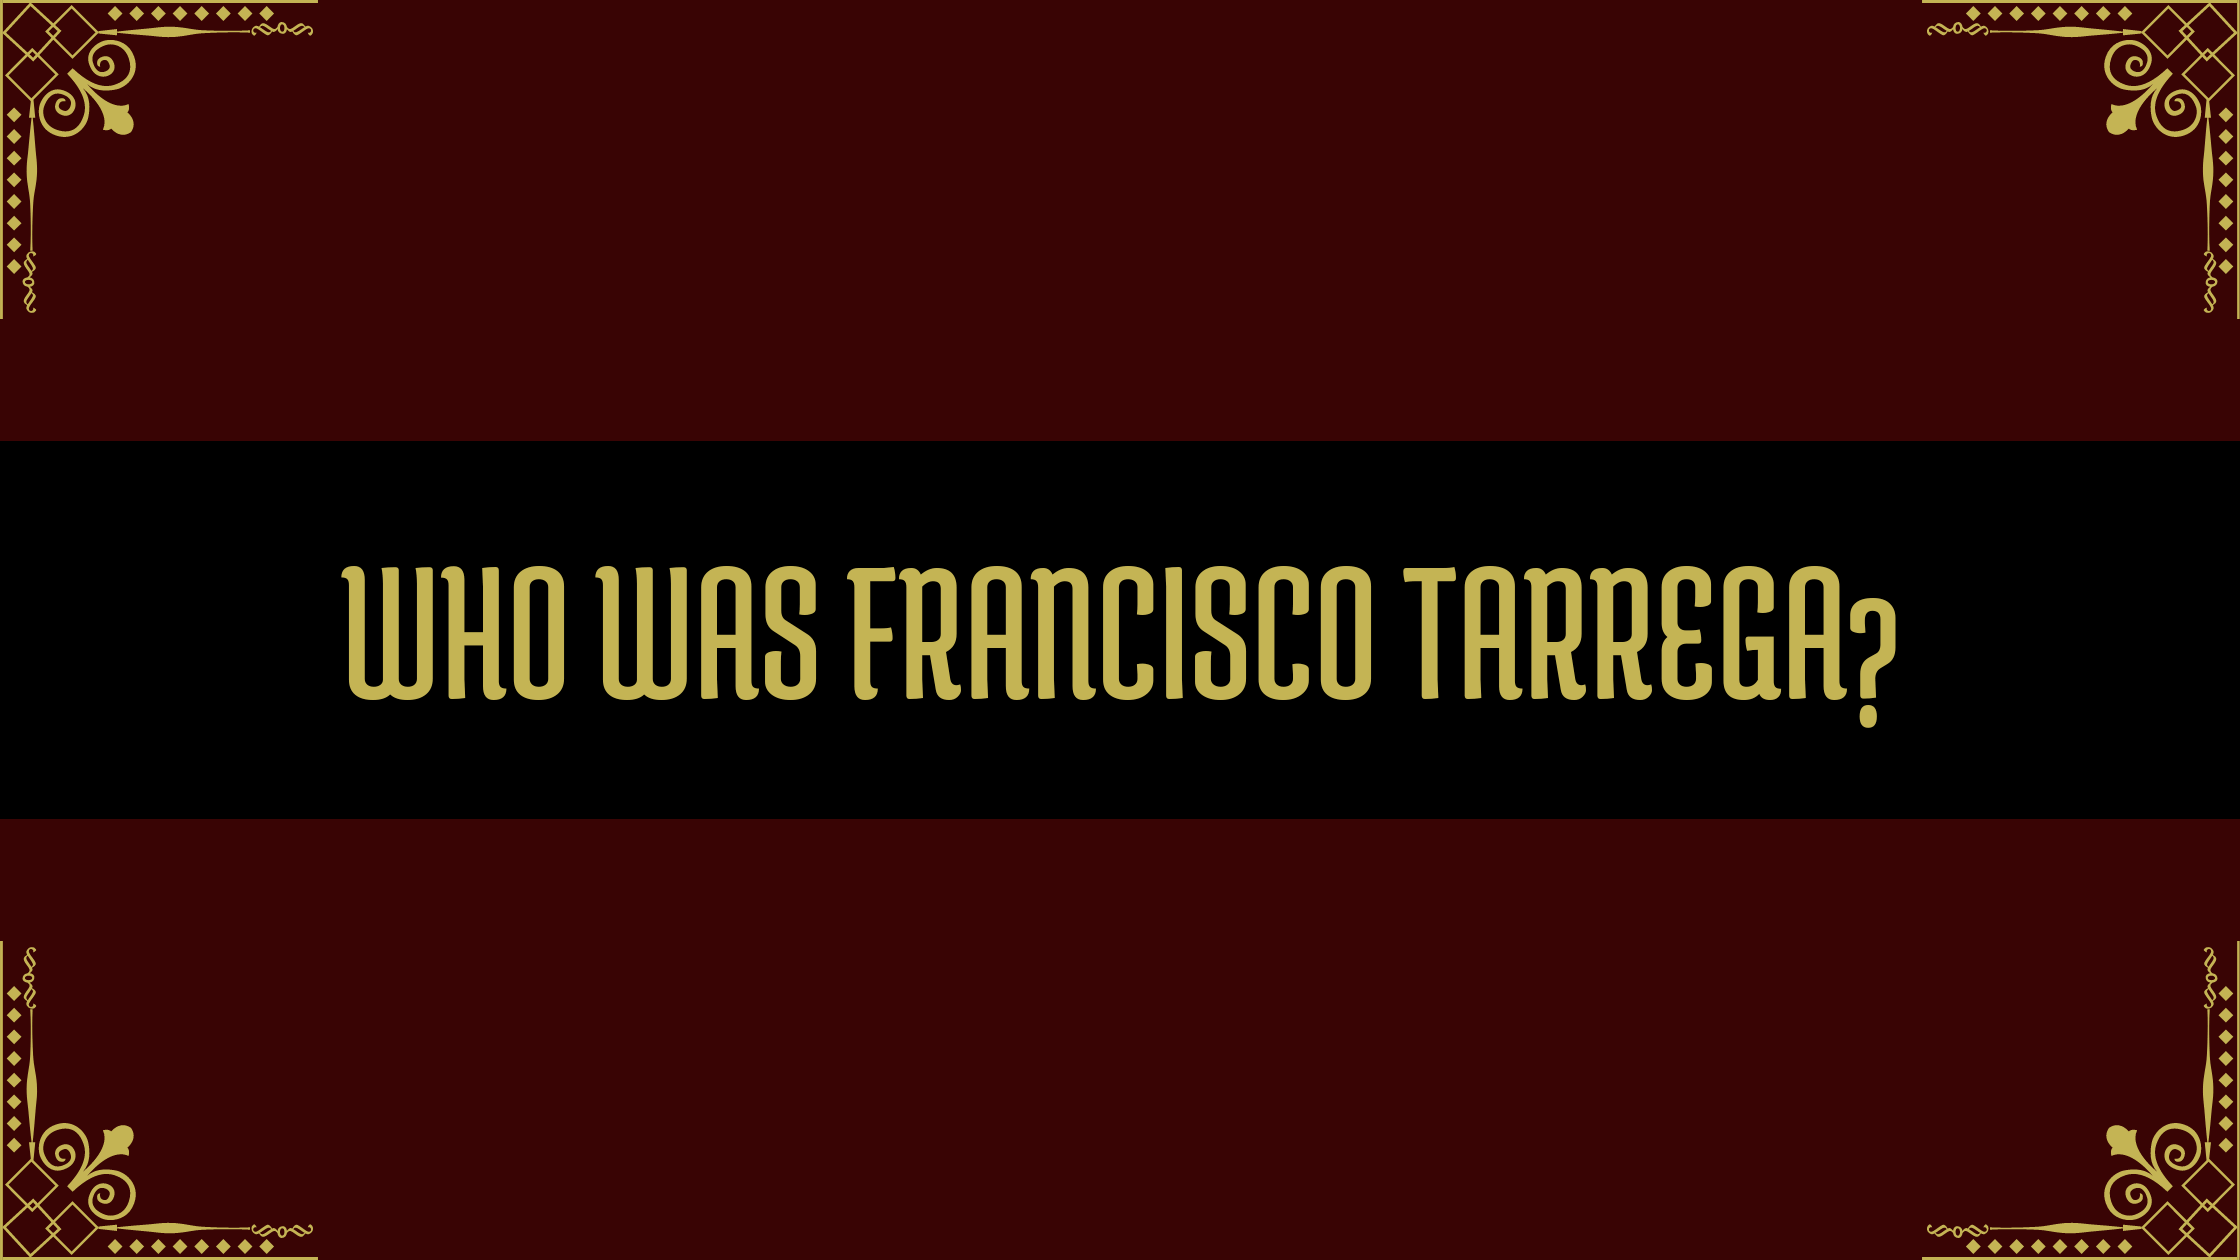 Blog post about Francisco Tarrega classical guitarist and composer